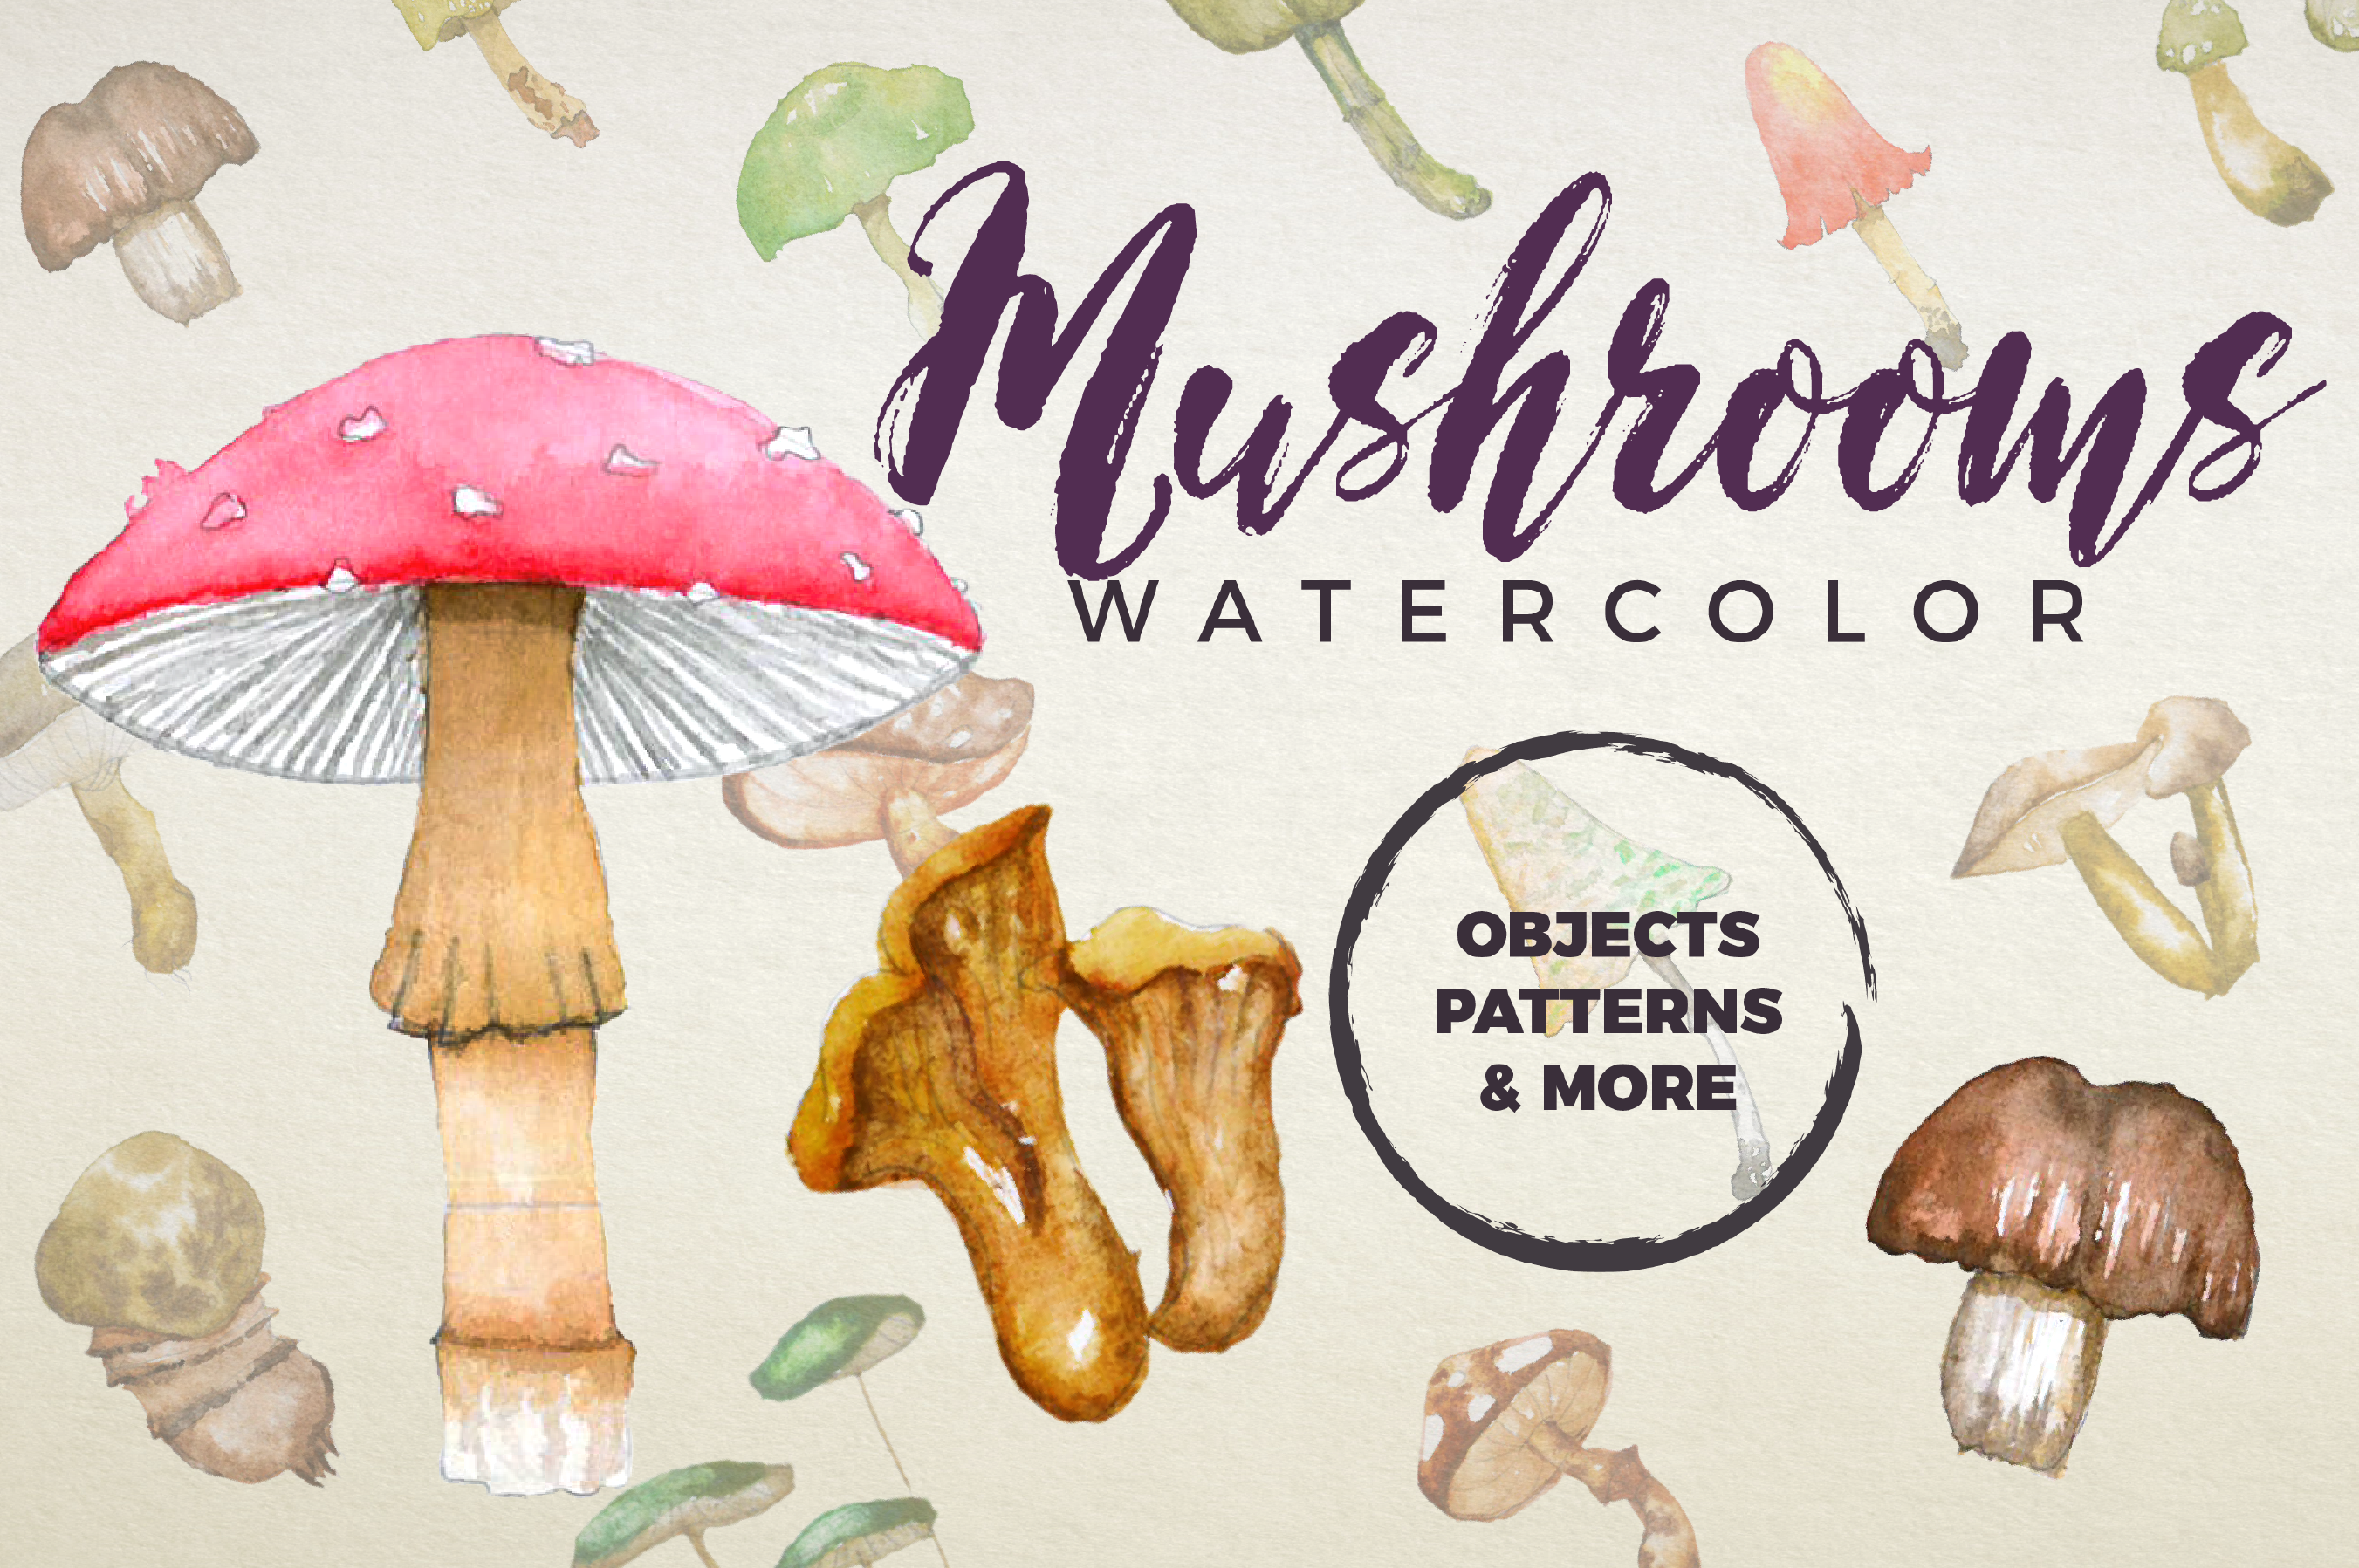 mushroom spore art